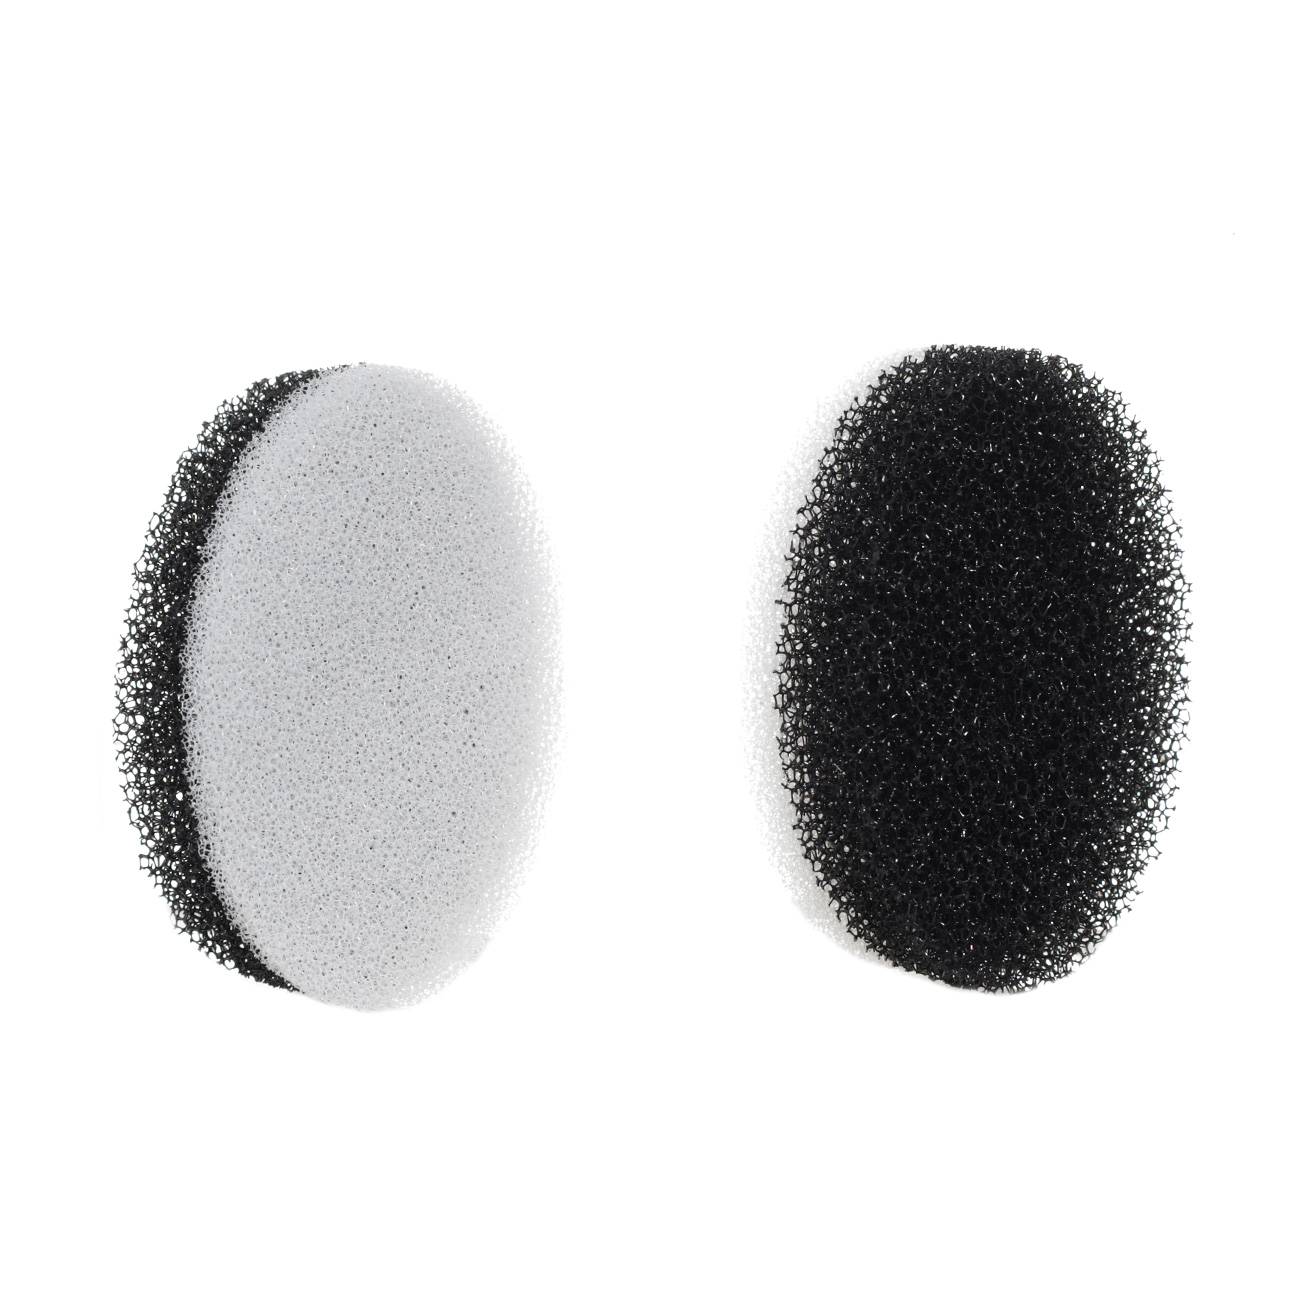 Sponge for washing dishes, 9x6 cm, 3 pcs, abrasive, oval, black and gray, Black clean изображение № 4